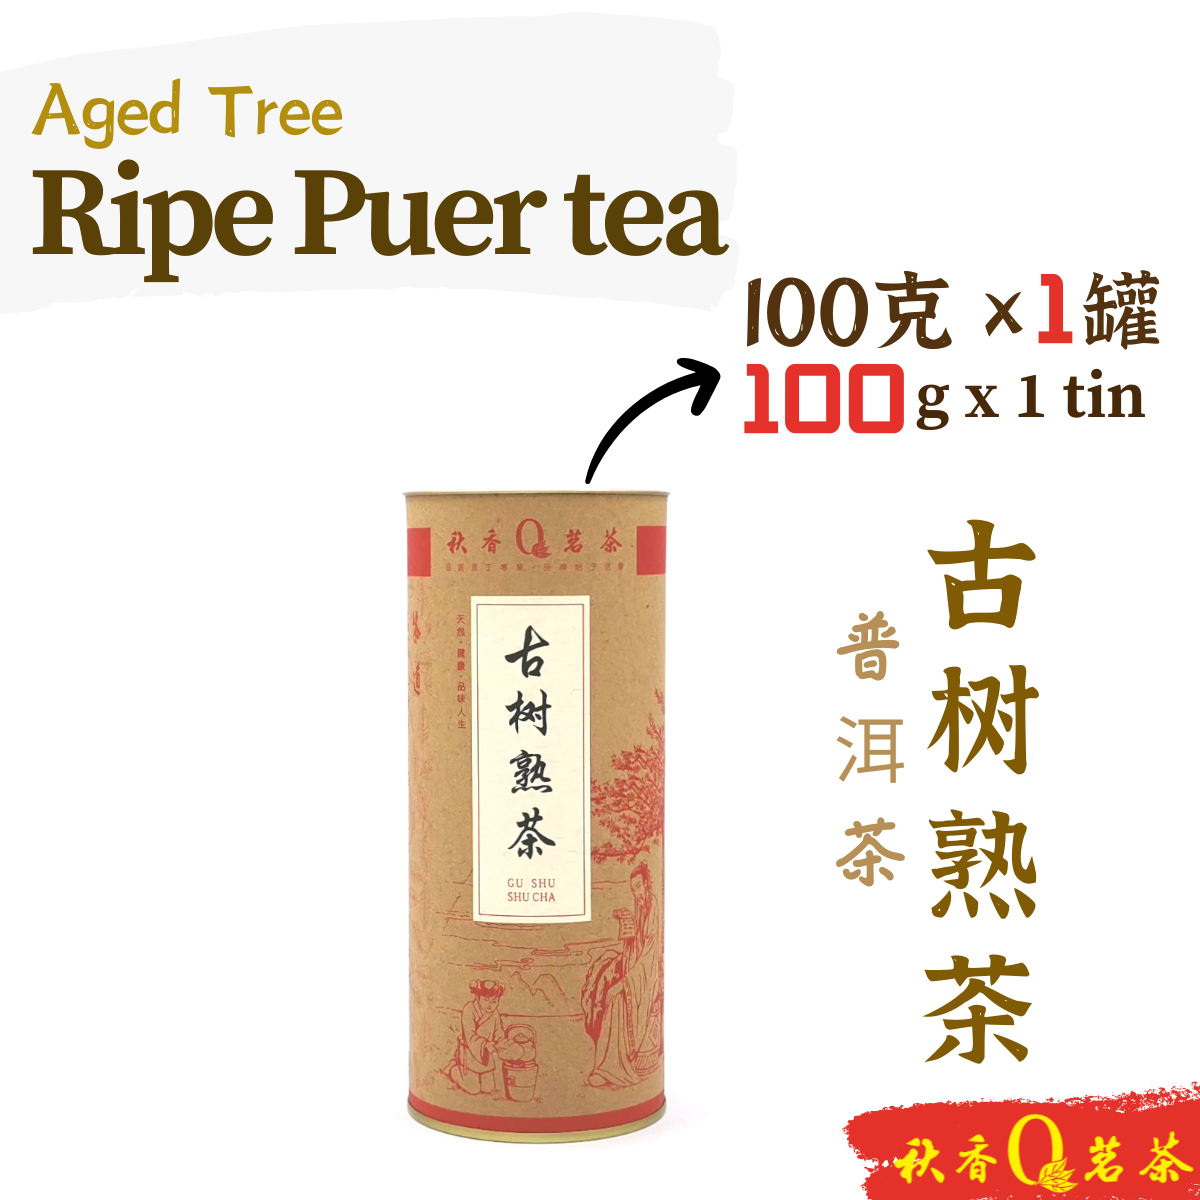 古树熟茶 Ripe Puer Tea (Aged Tree) 【100g】|【普洱熟茶 Puer tea】